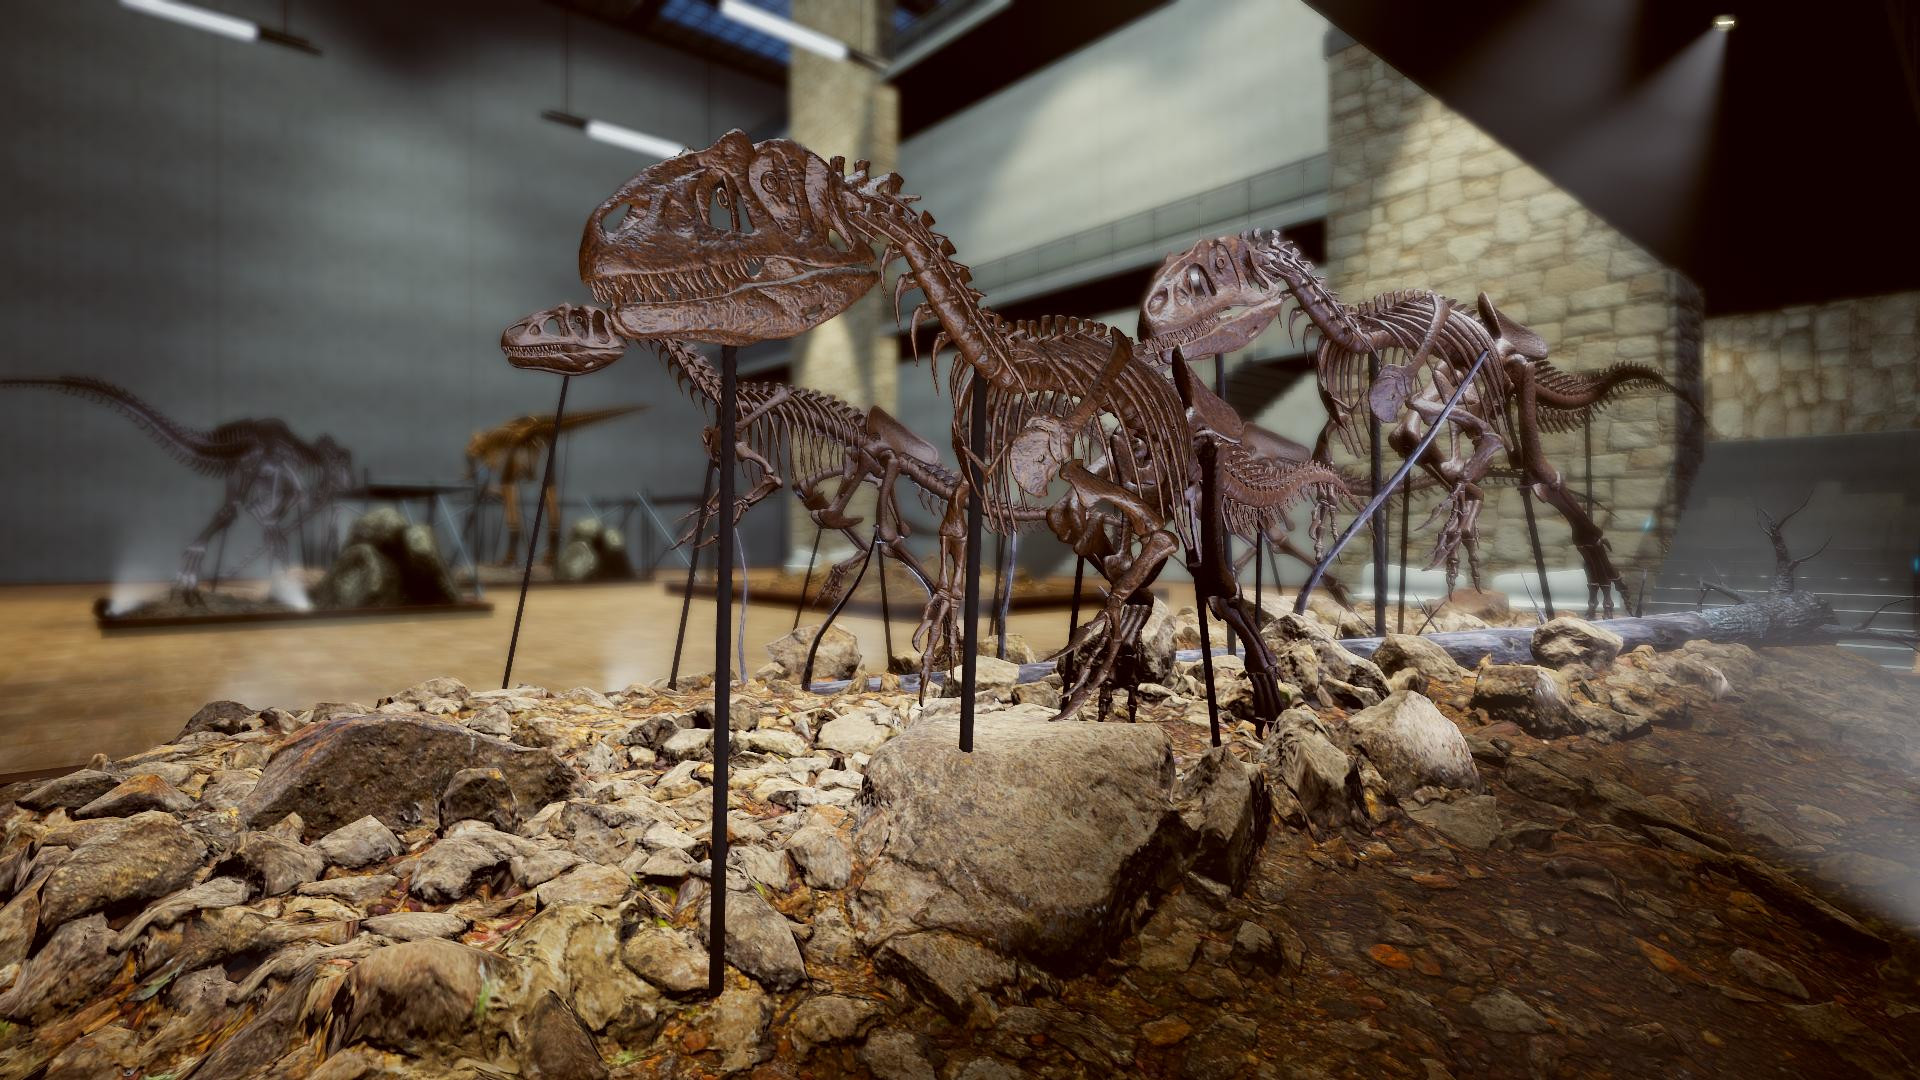 恐龙化石猎人古生物学家模拟器/Dinosaur Fossil Hunter